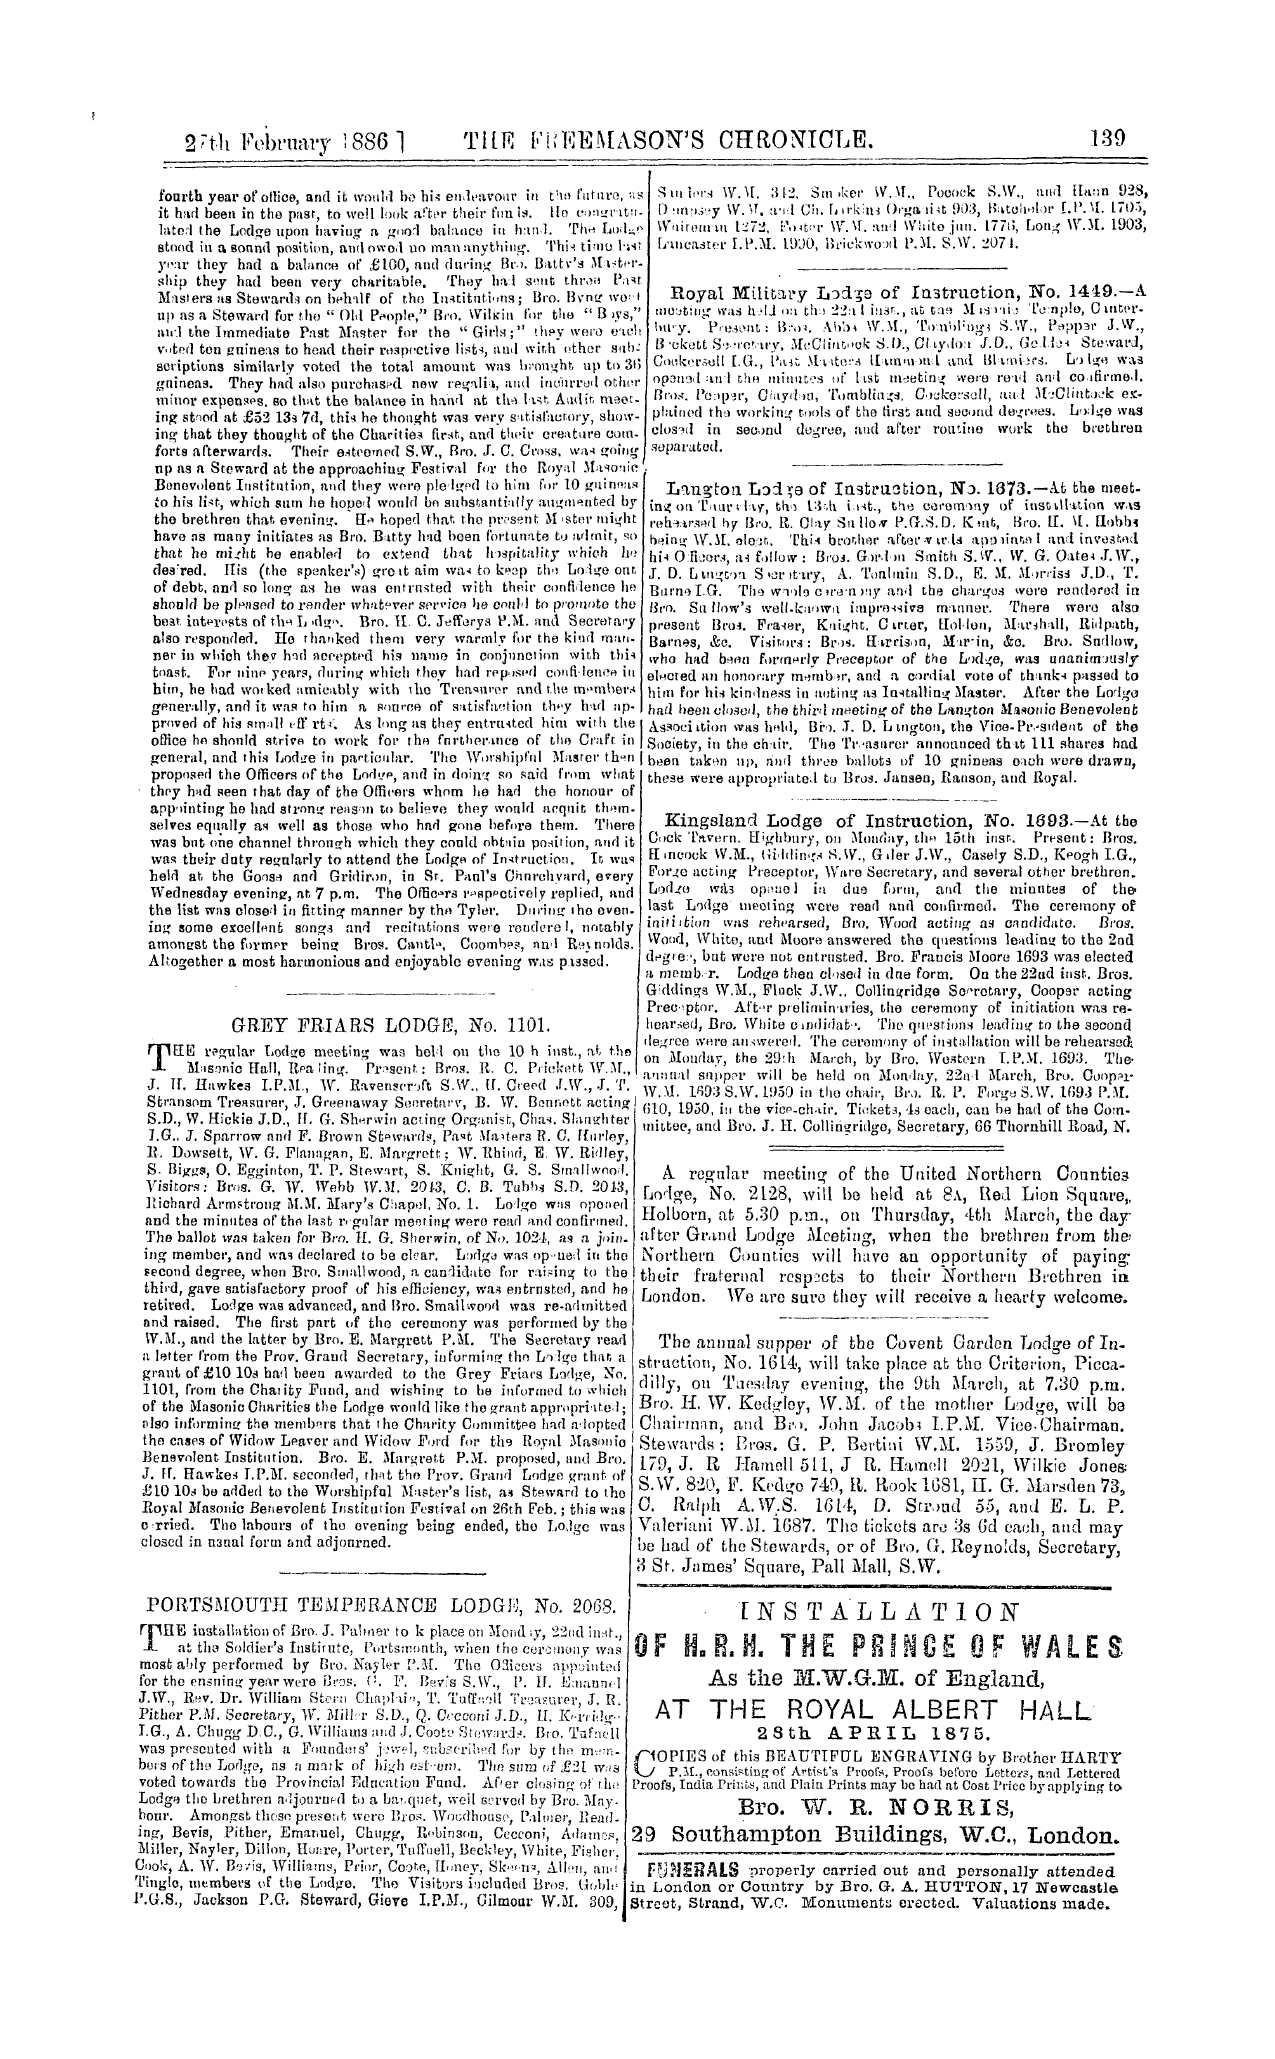 The Freemason's Chronicle: 1886-02-27 - Burgoyne Lodge, No. 902.